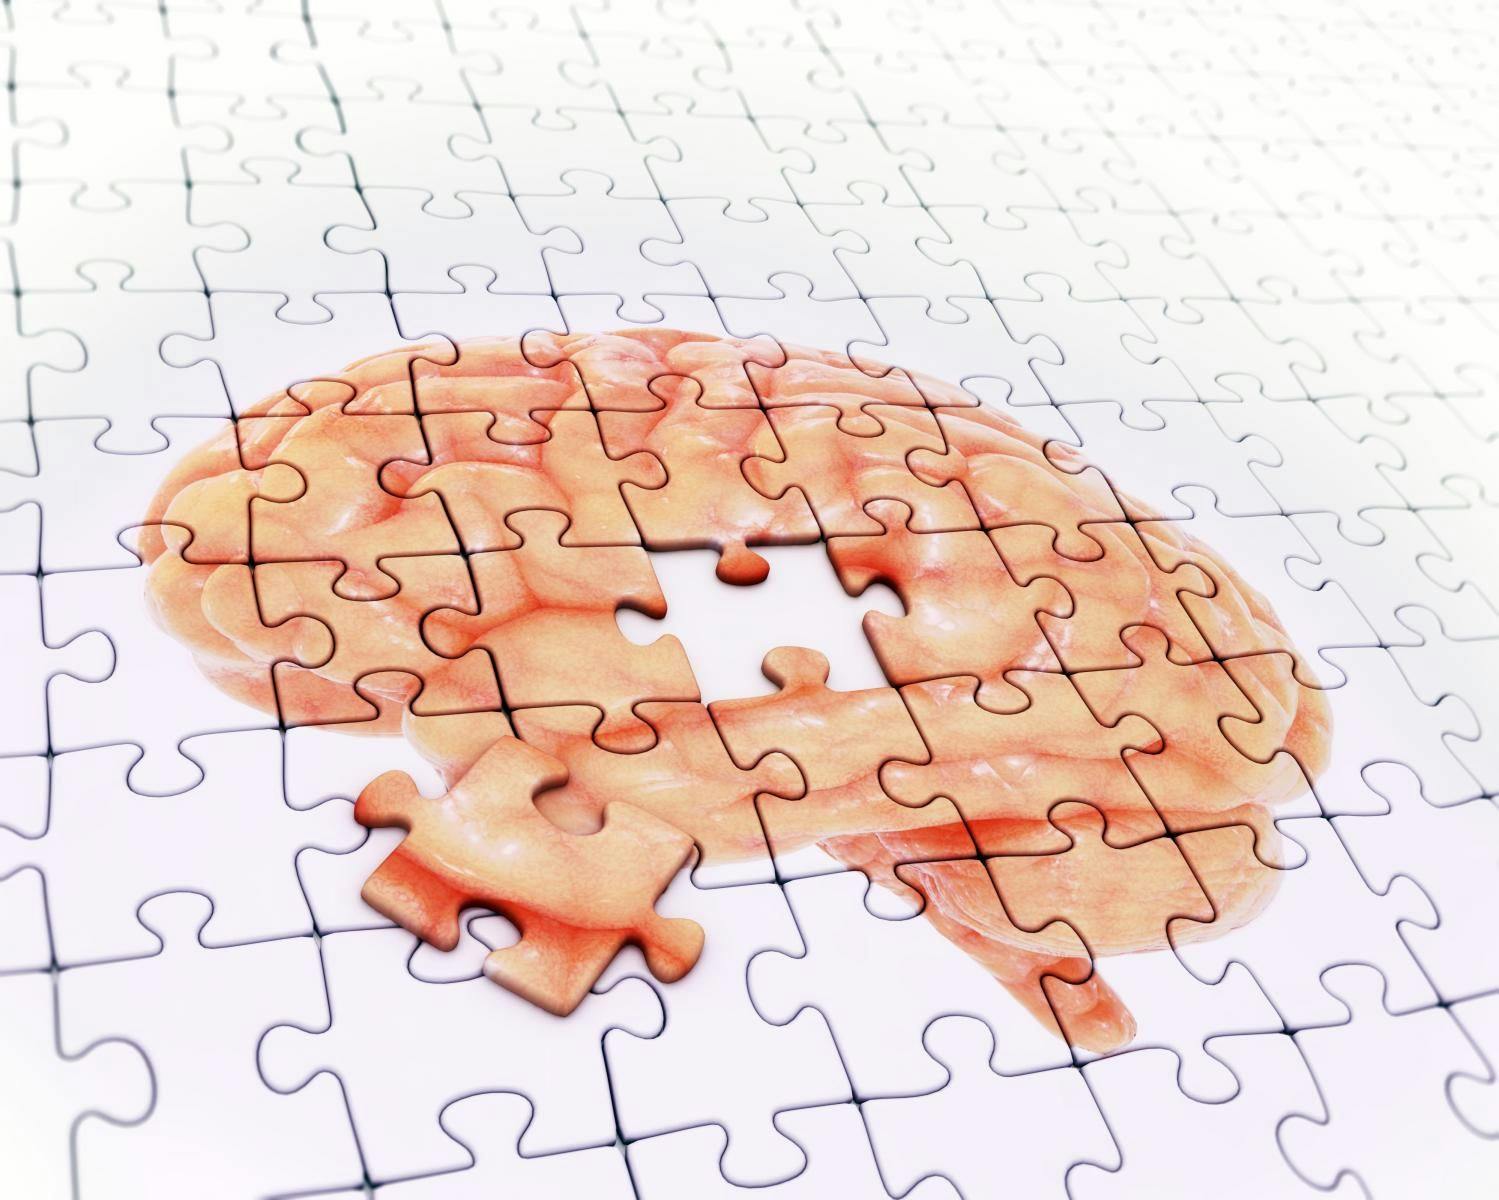 Can Neurofeedback Training Be Effective in Huntington's Disease?